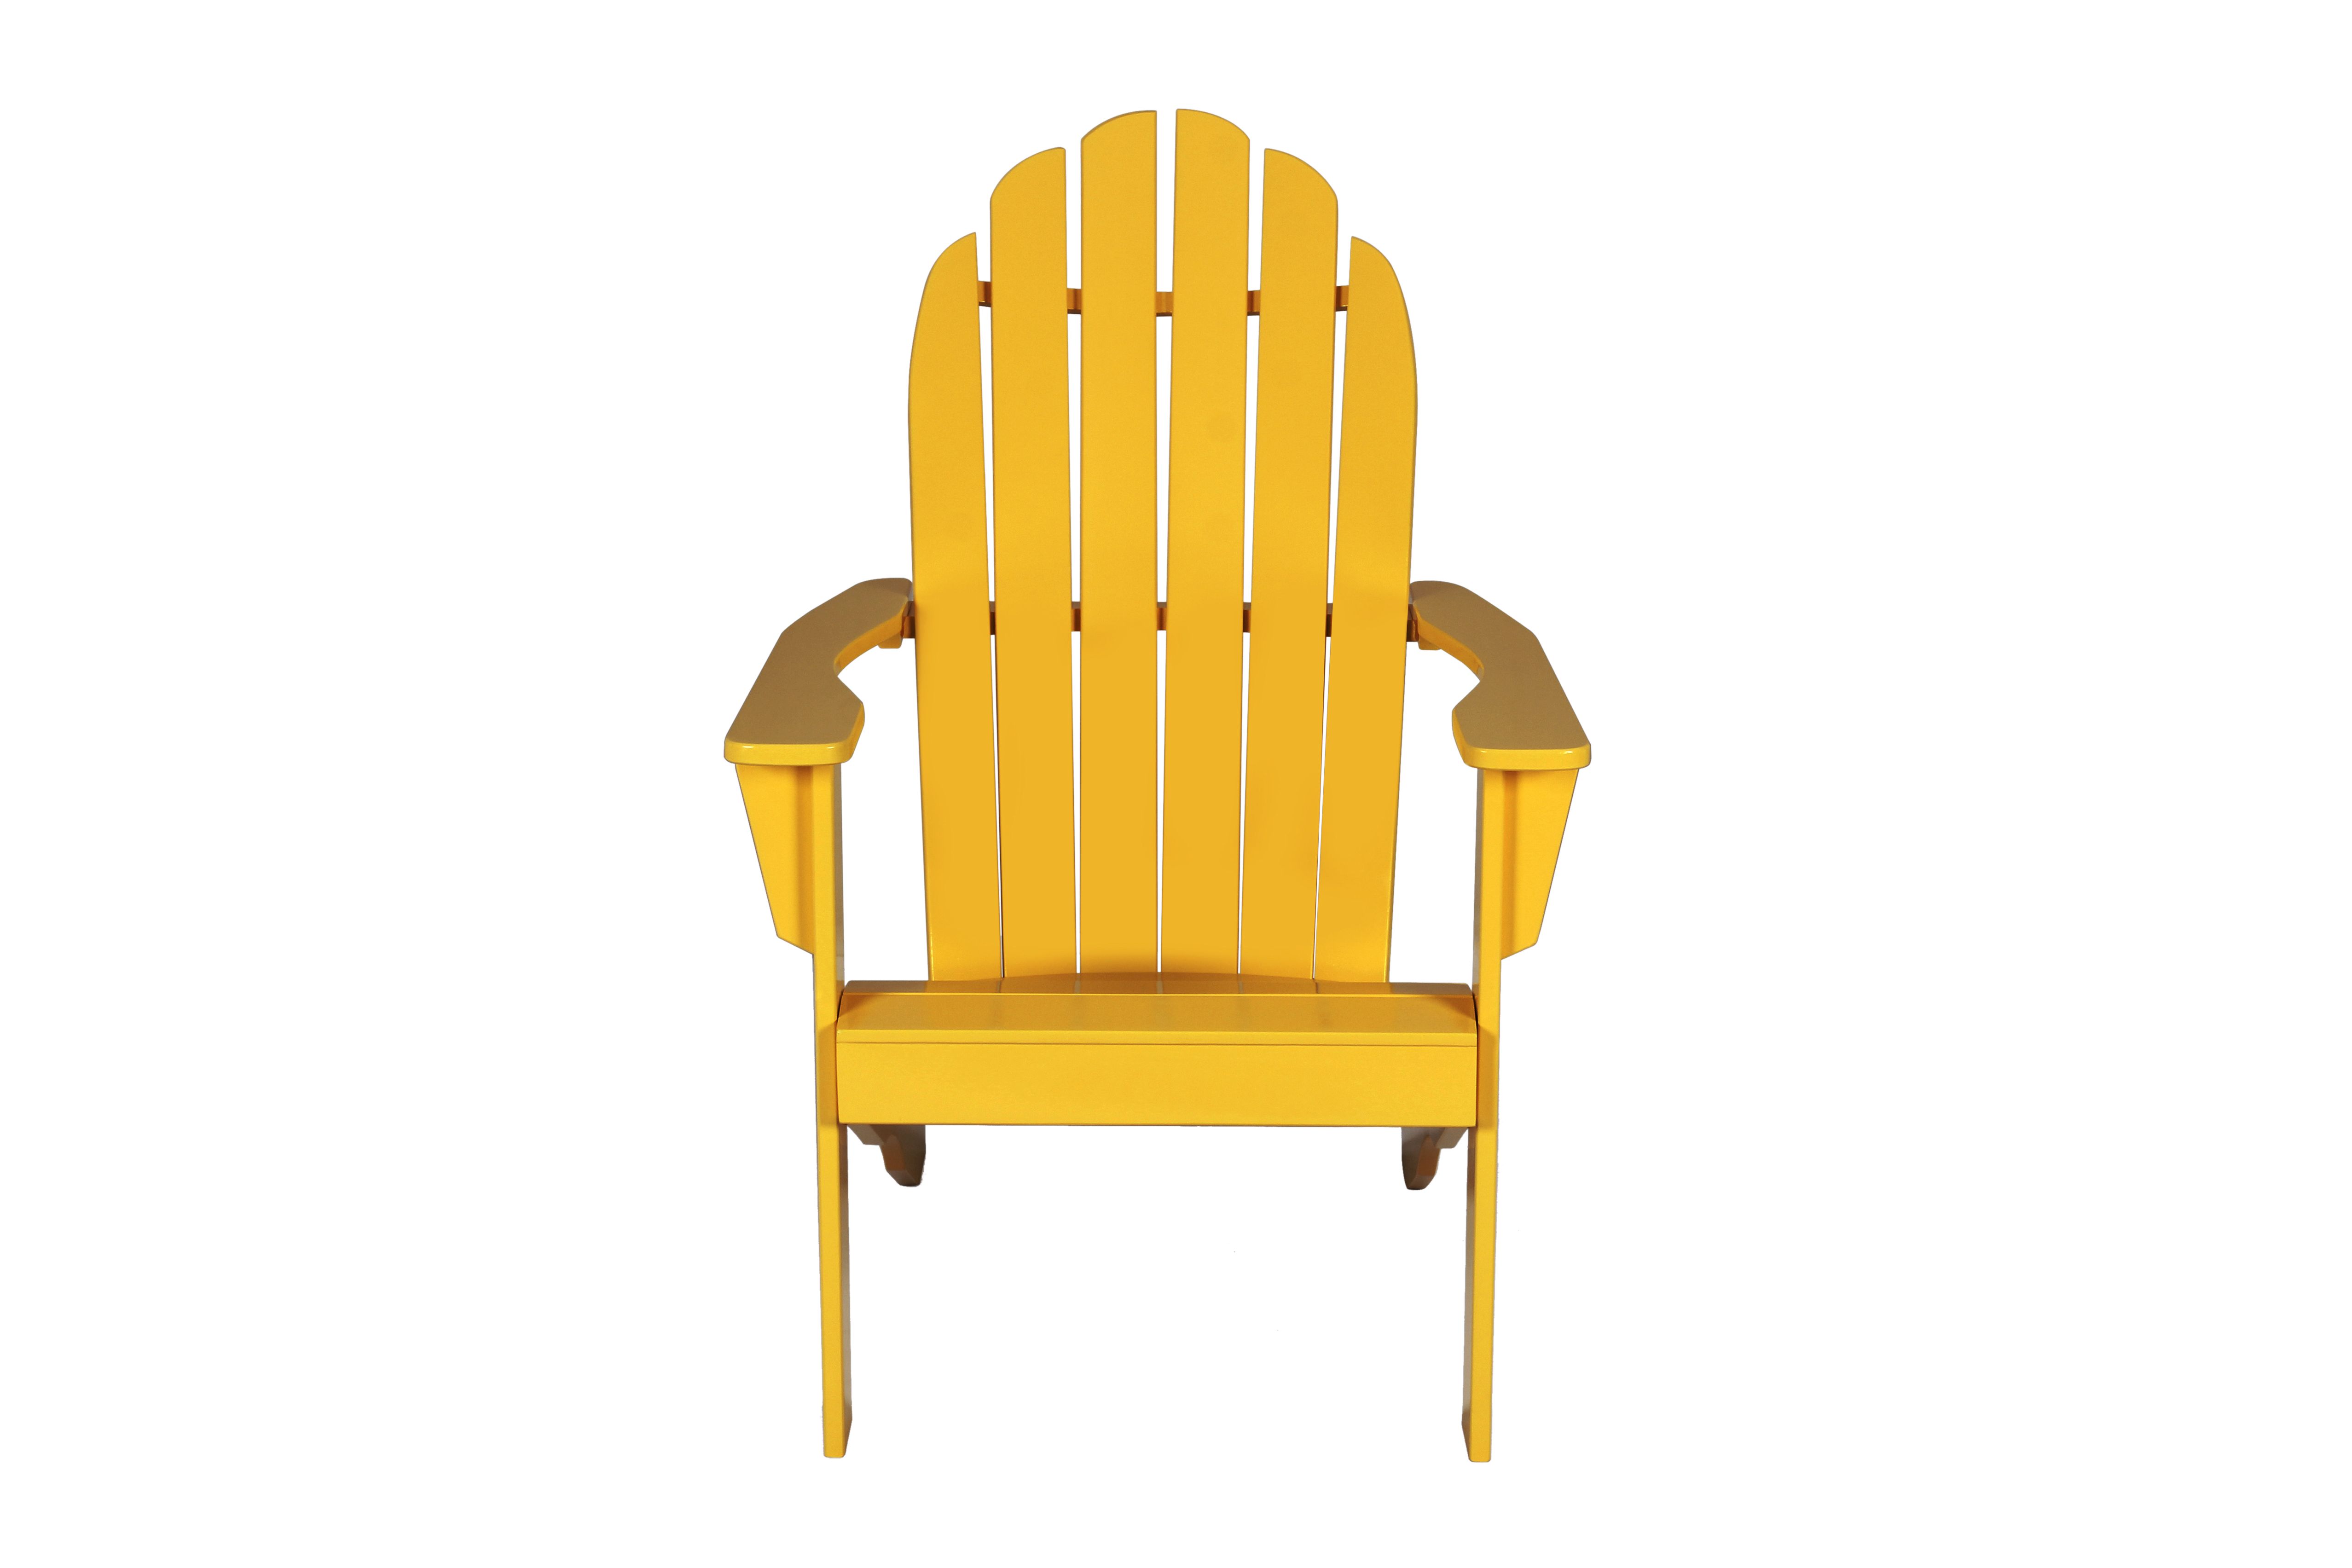 Mainstays Hardwood Adirondack Chair - Yellow - image 2 of 8